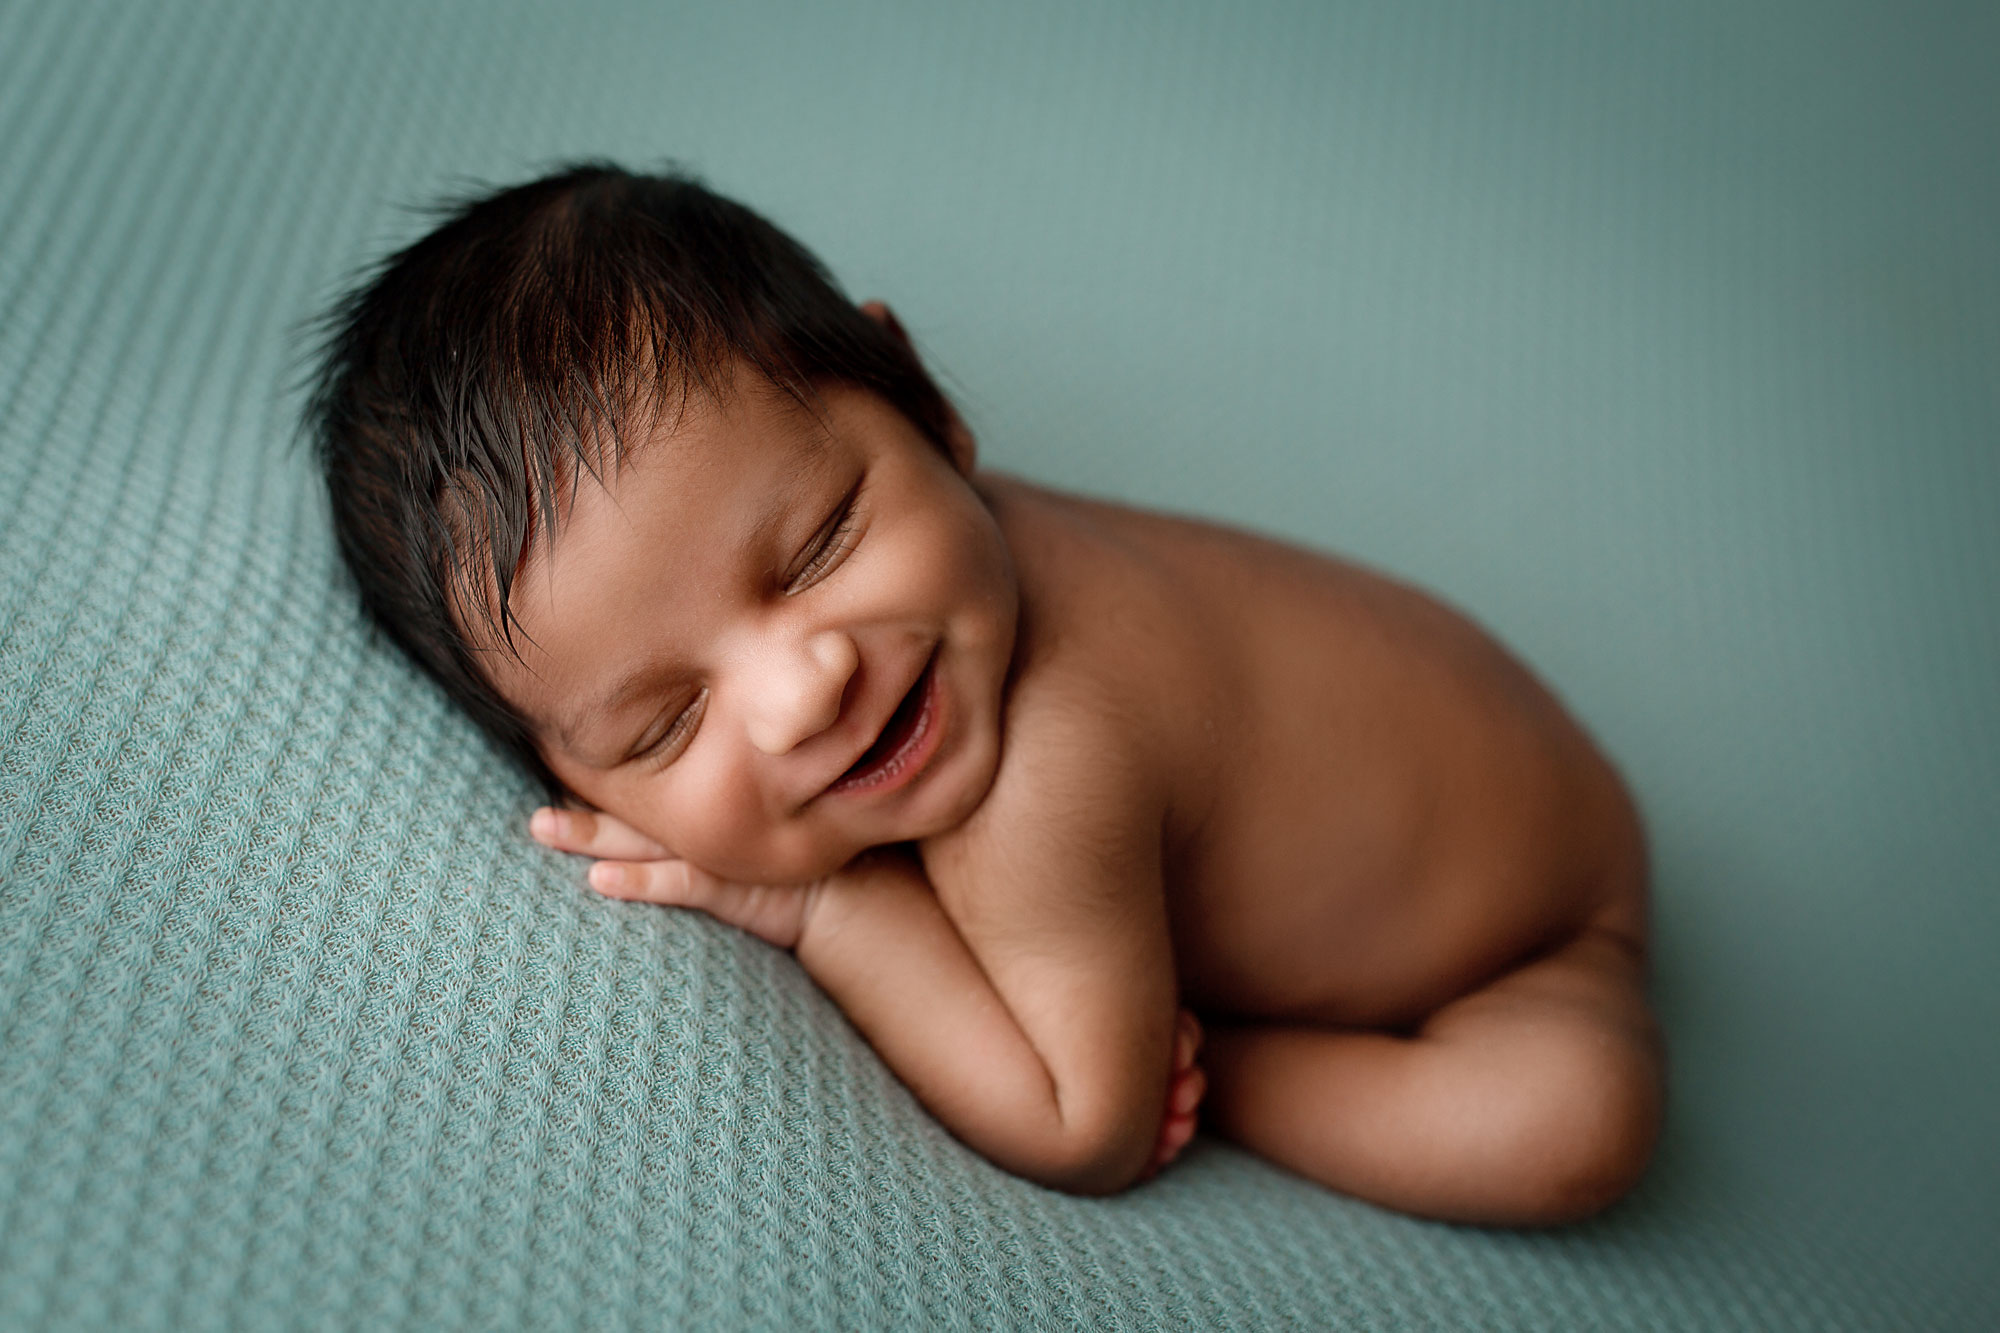 Smiling Newborns Photos